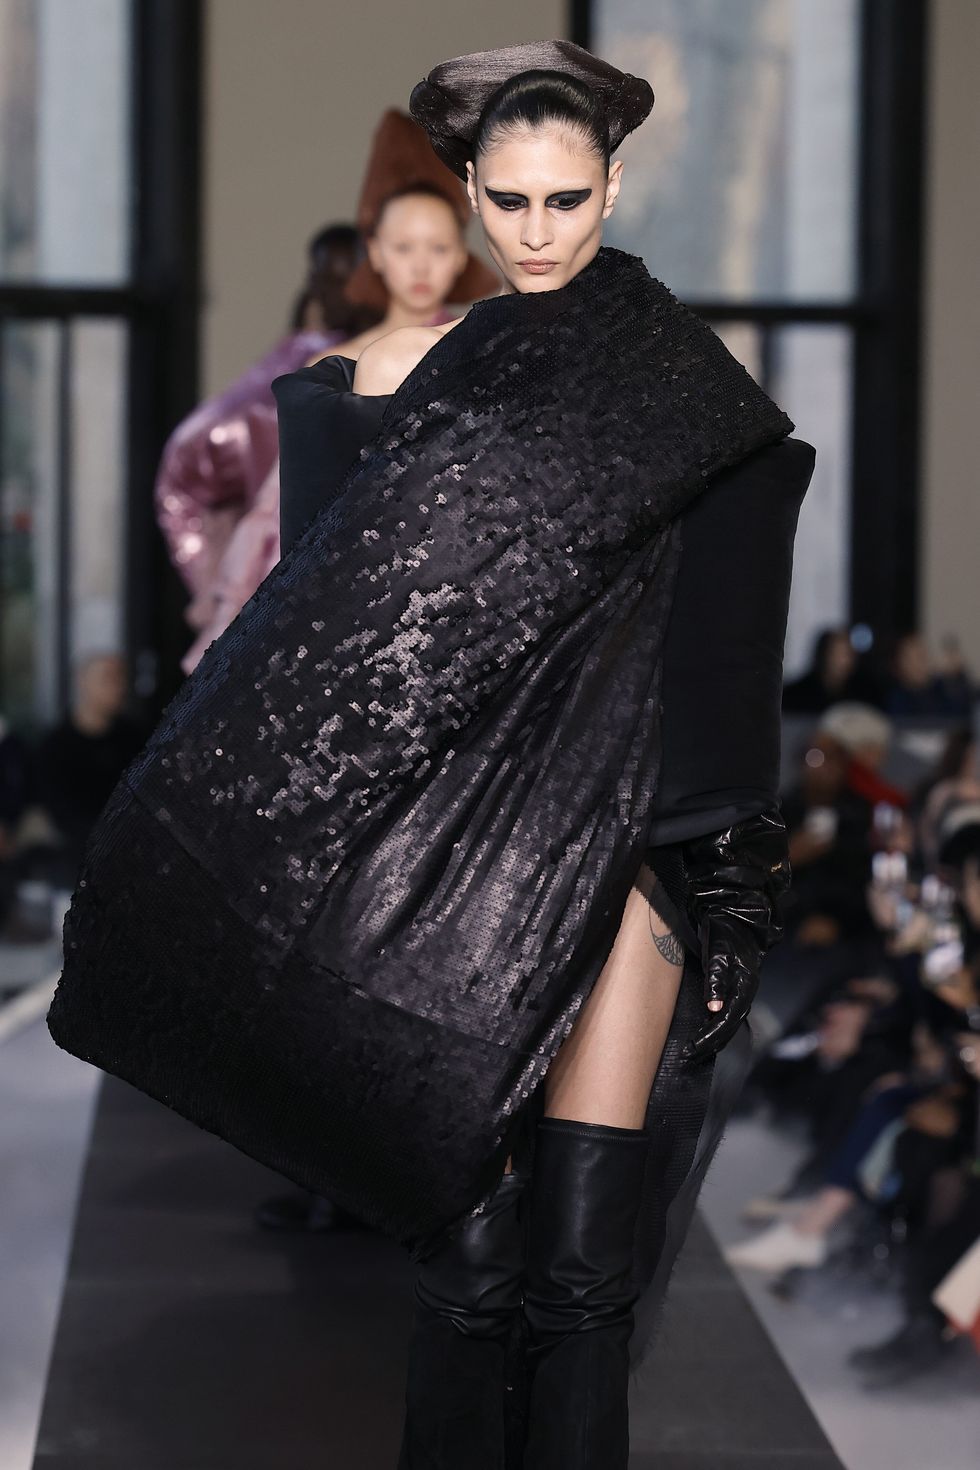 Women's Ready-To-Wear Fall/Winter 2012 Paris - Louis Vuitton News Photo -  Getty Images